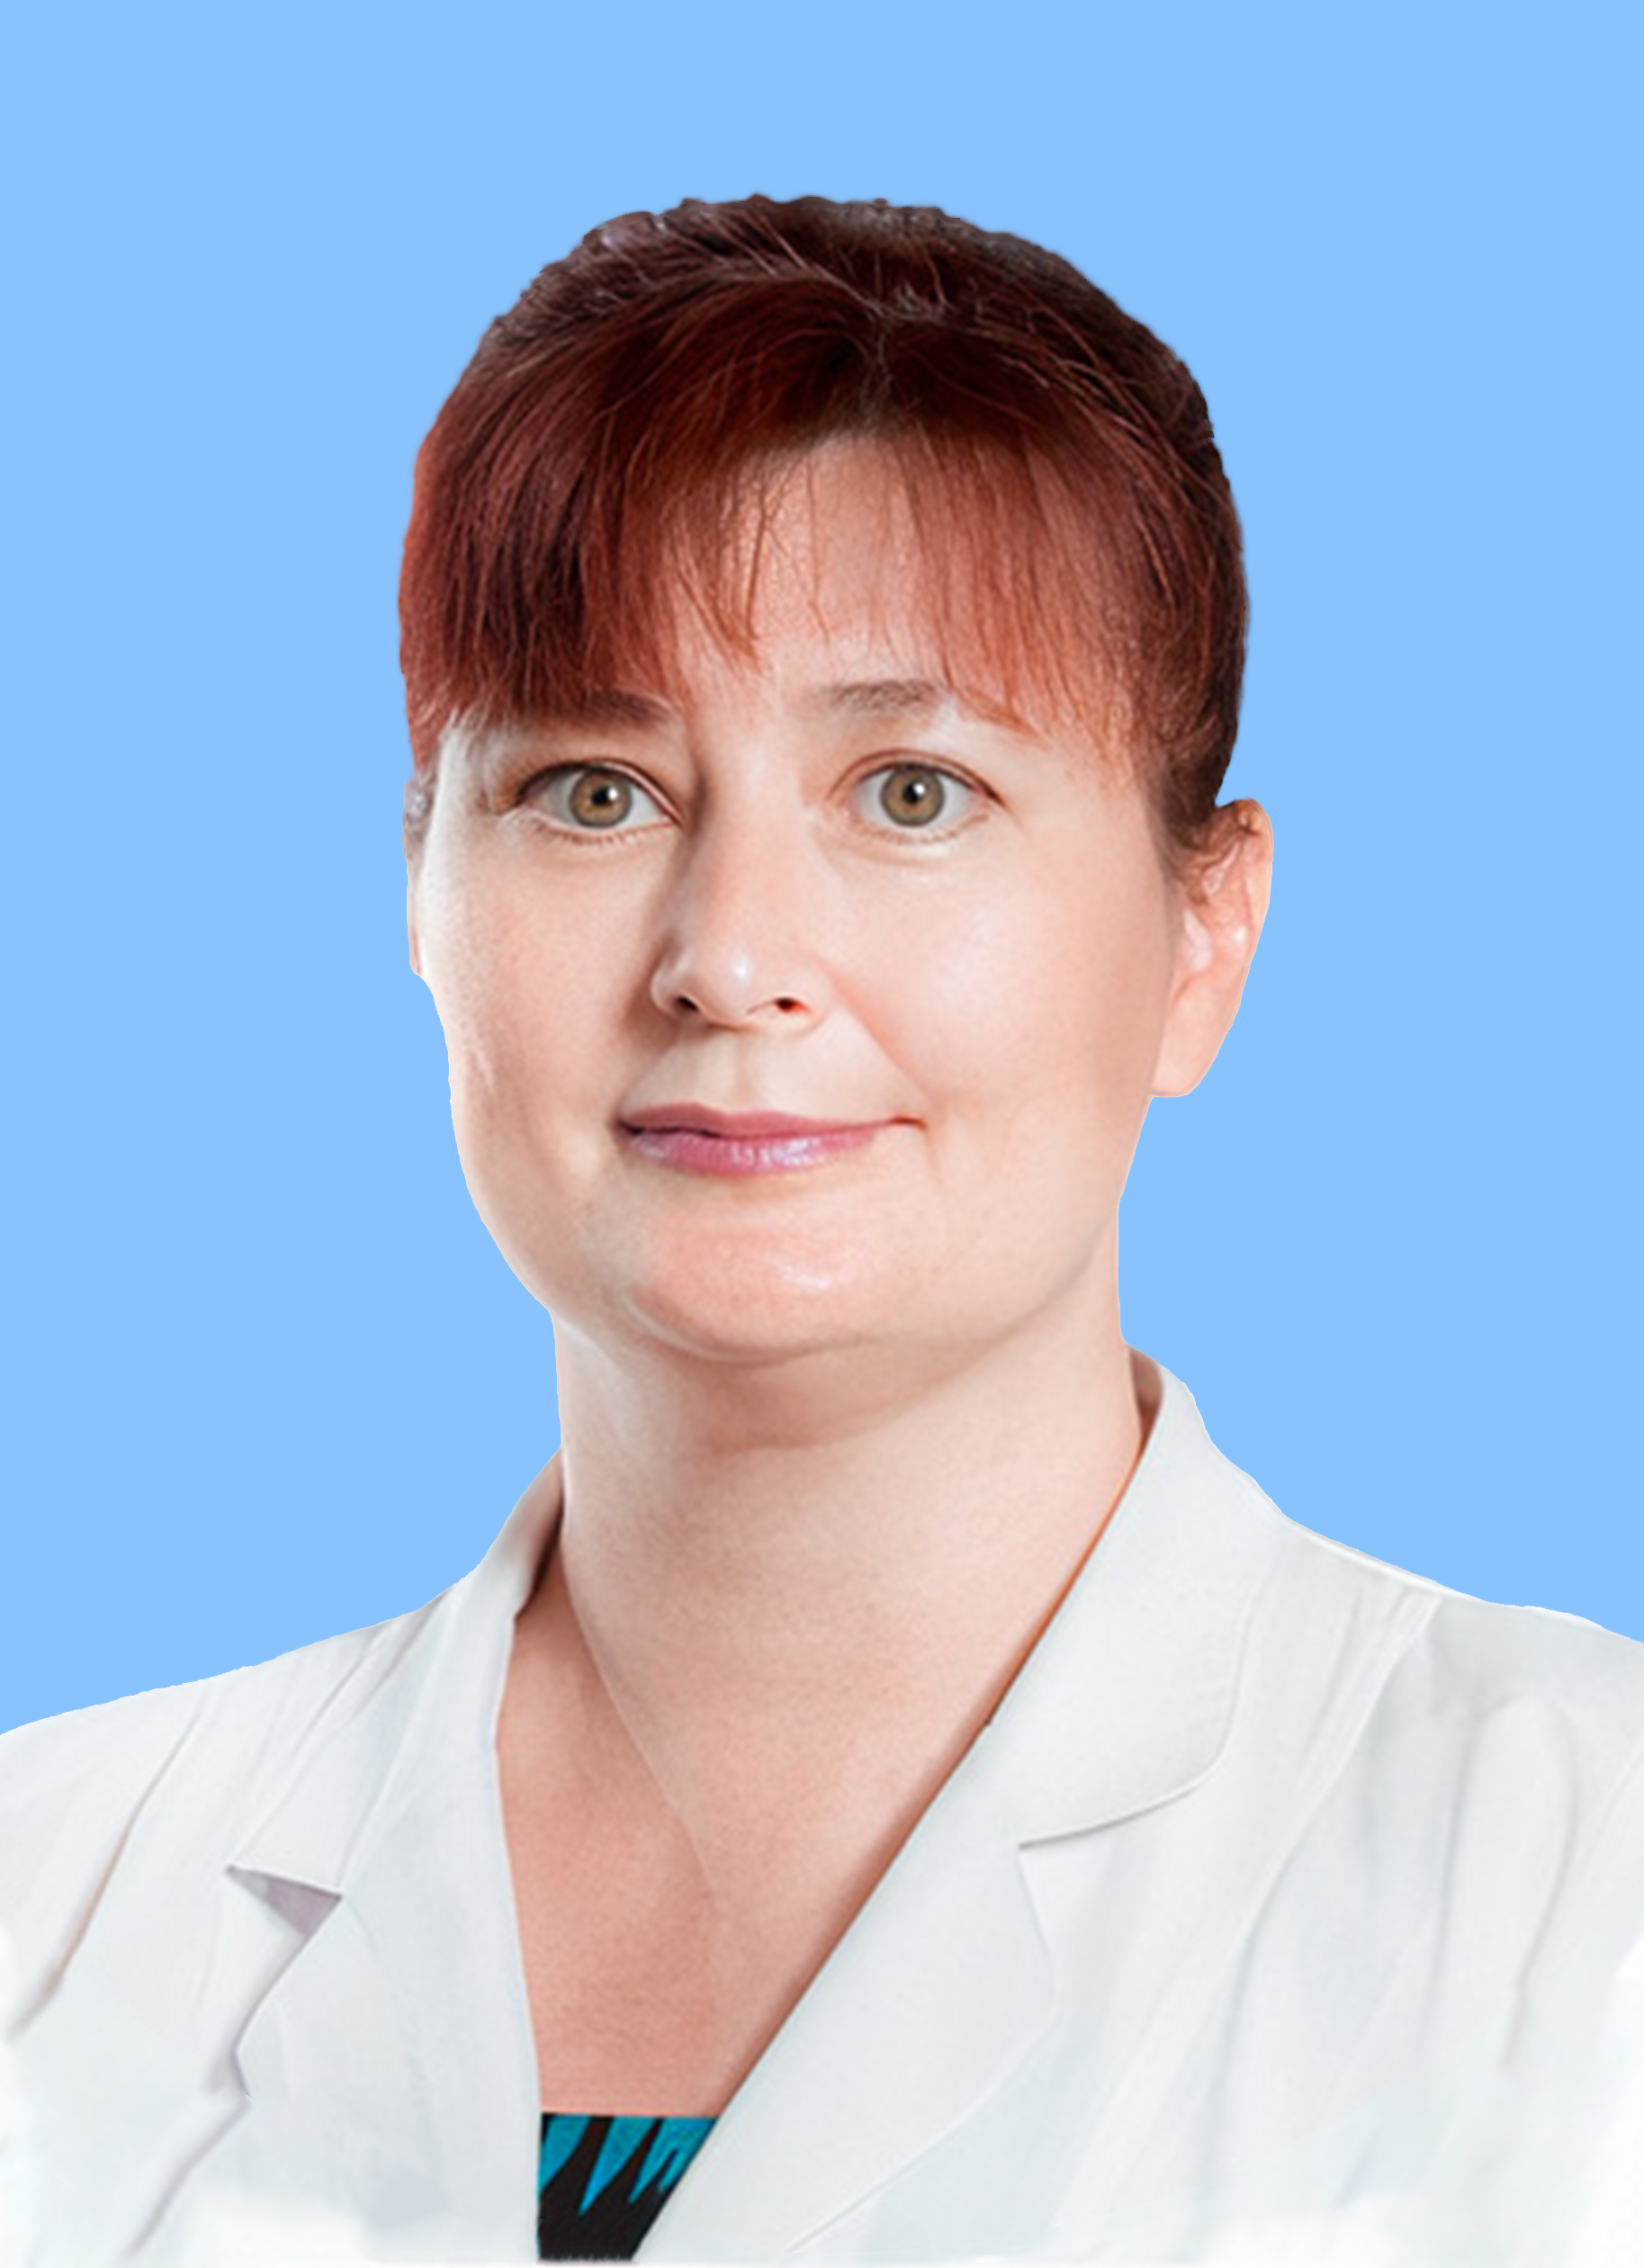 Гордеева Татьяна Владимировна гинеколог-гинеколог-эндокринолог